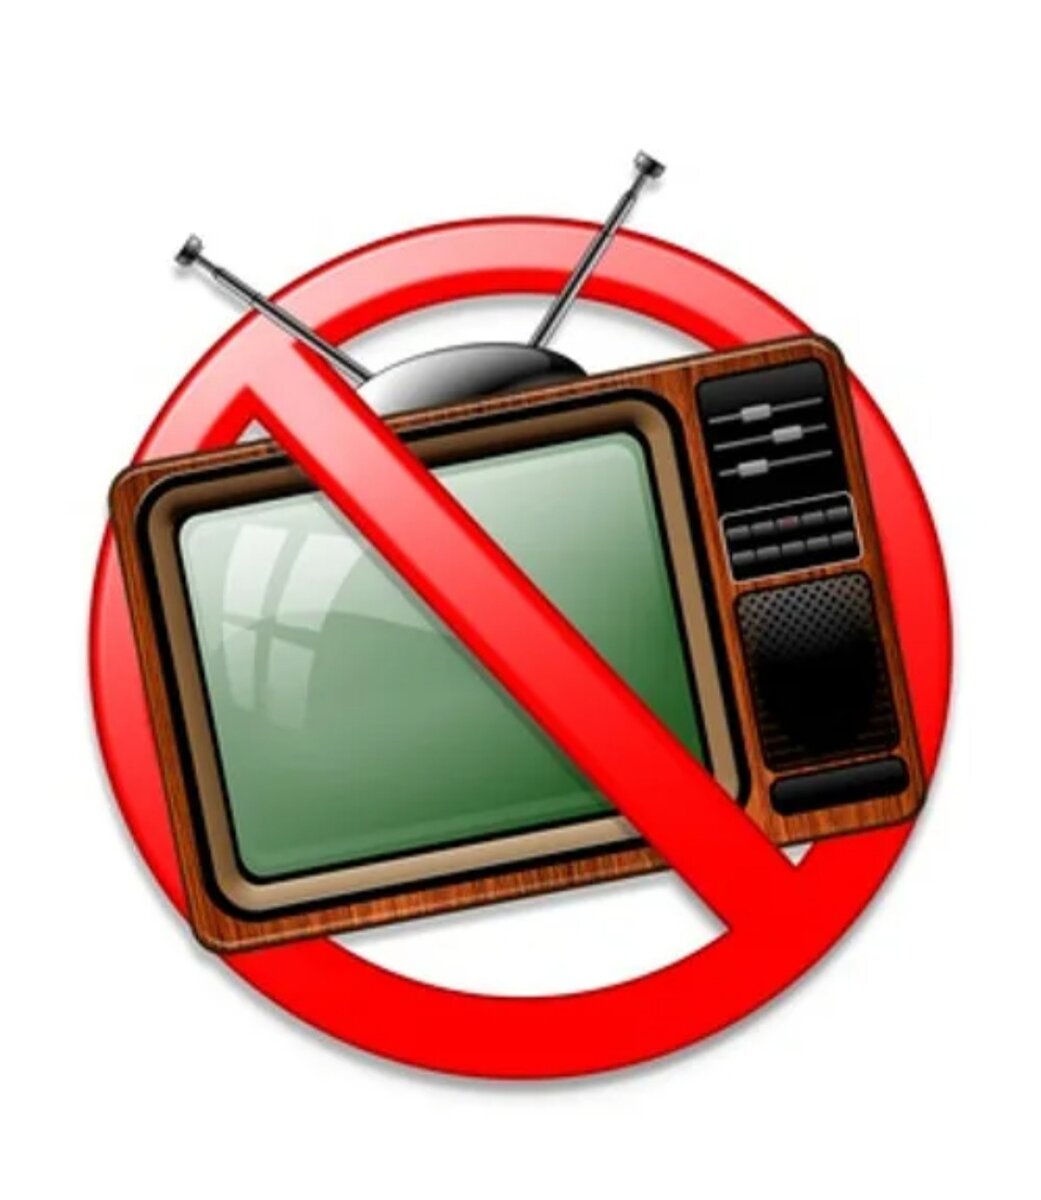 Выключи телевизор время. Перечеркнутый телевизор. Запрет телевизора. Телевизор выключенный. Без телевизора.